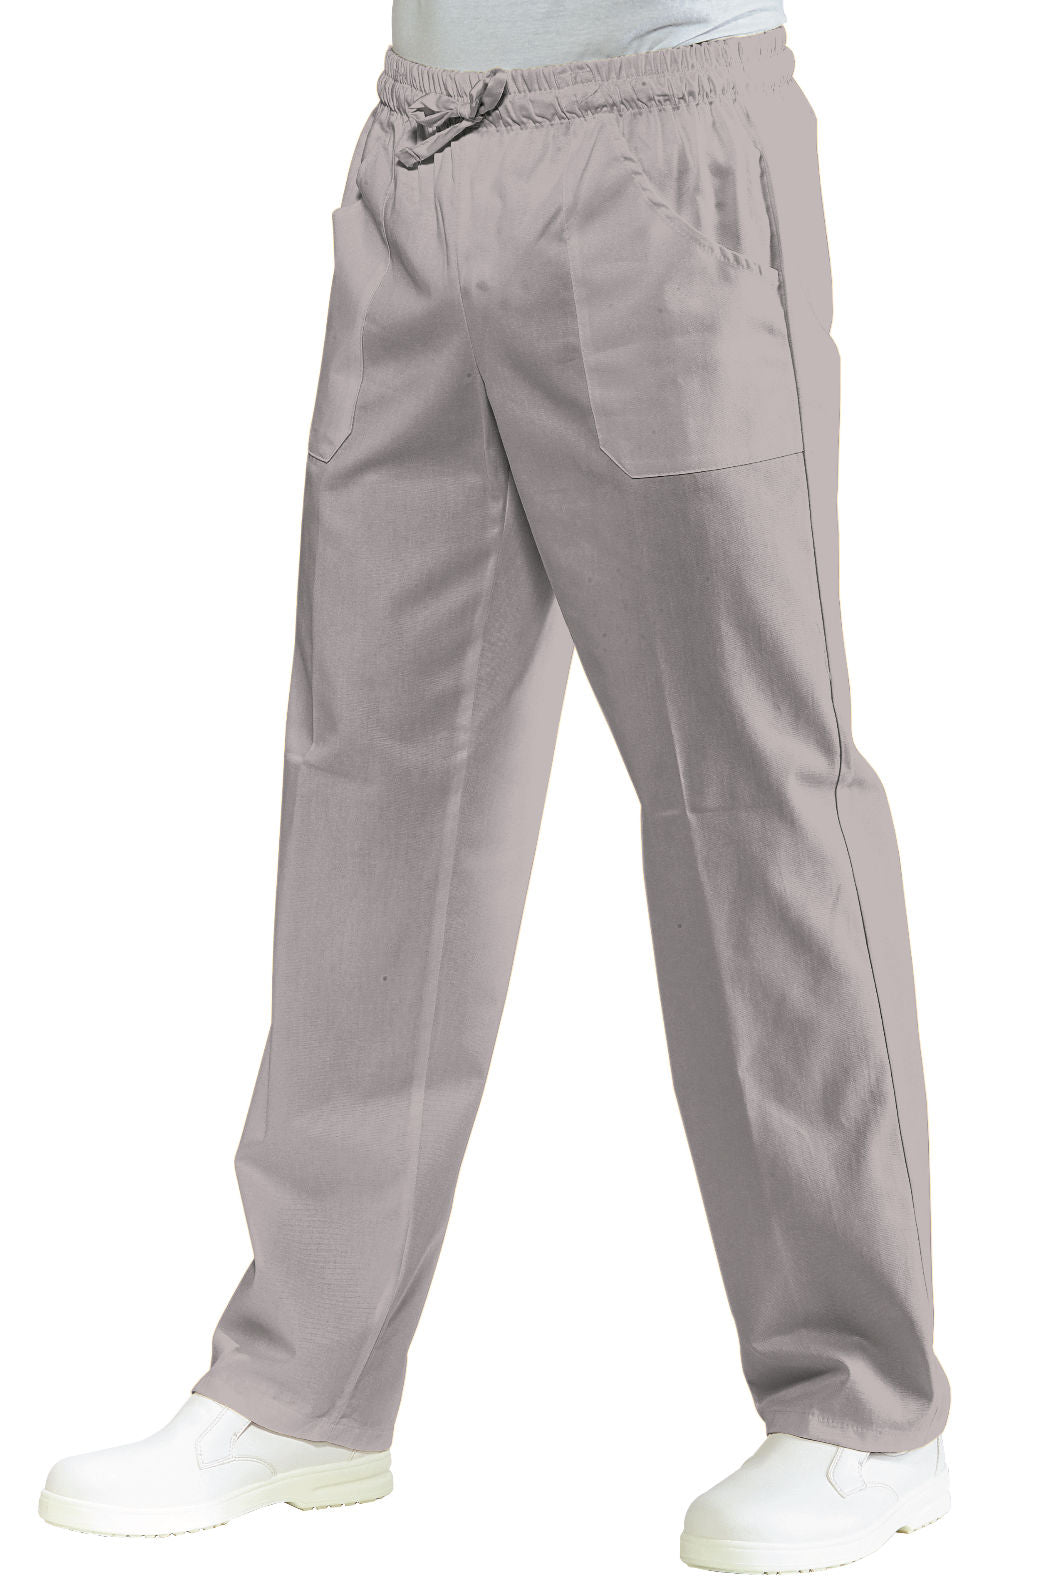 pantalone-con-elastico-colore-grigio-isacco-044012